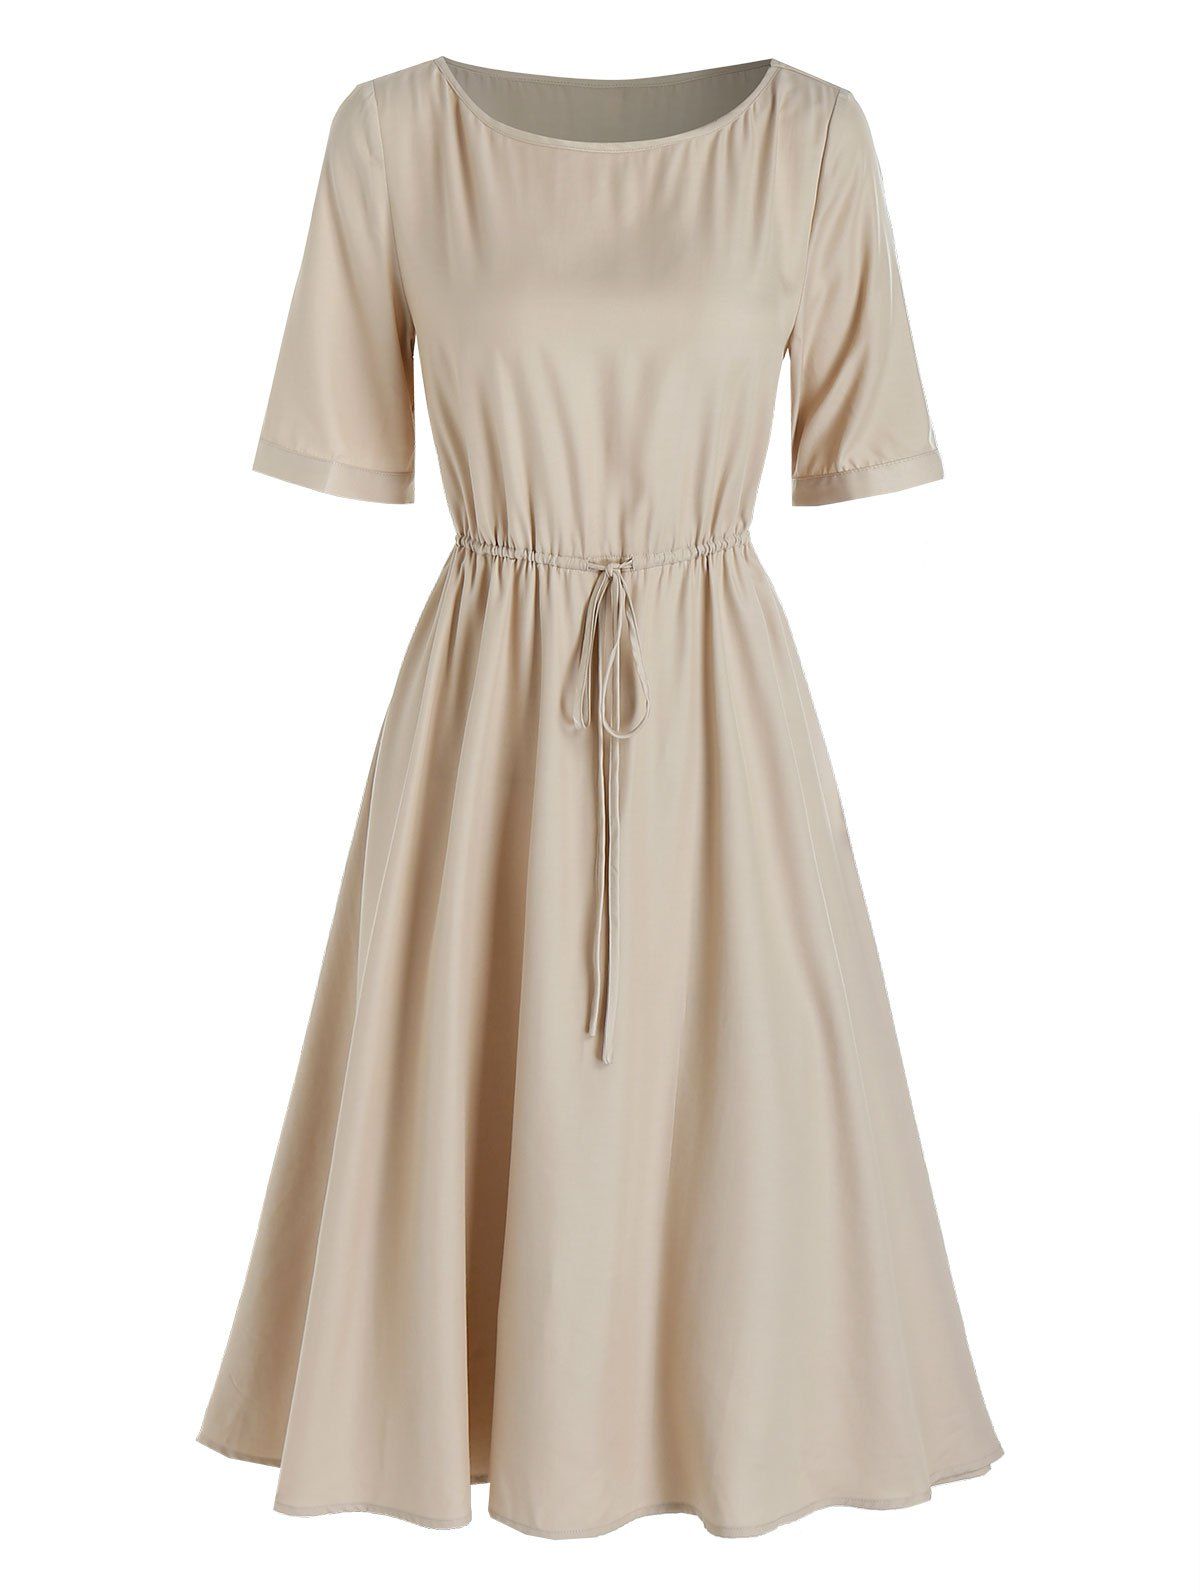 Half Sleeve Toggle Drawstring Casual Dress - LIGHT COFFEE 3XL